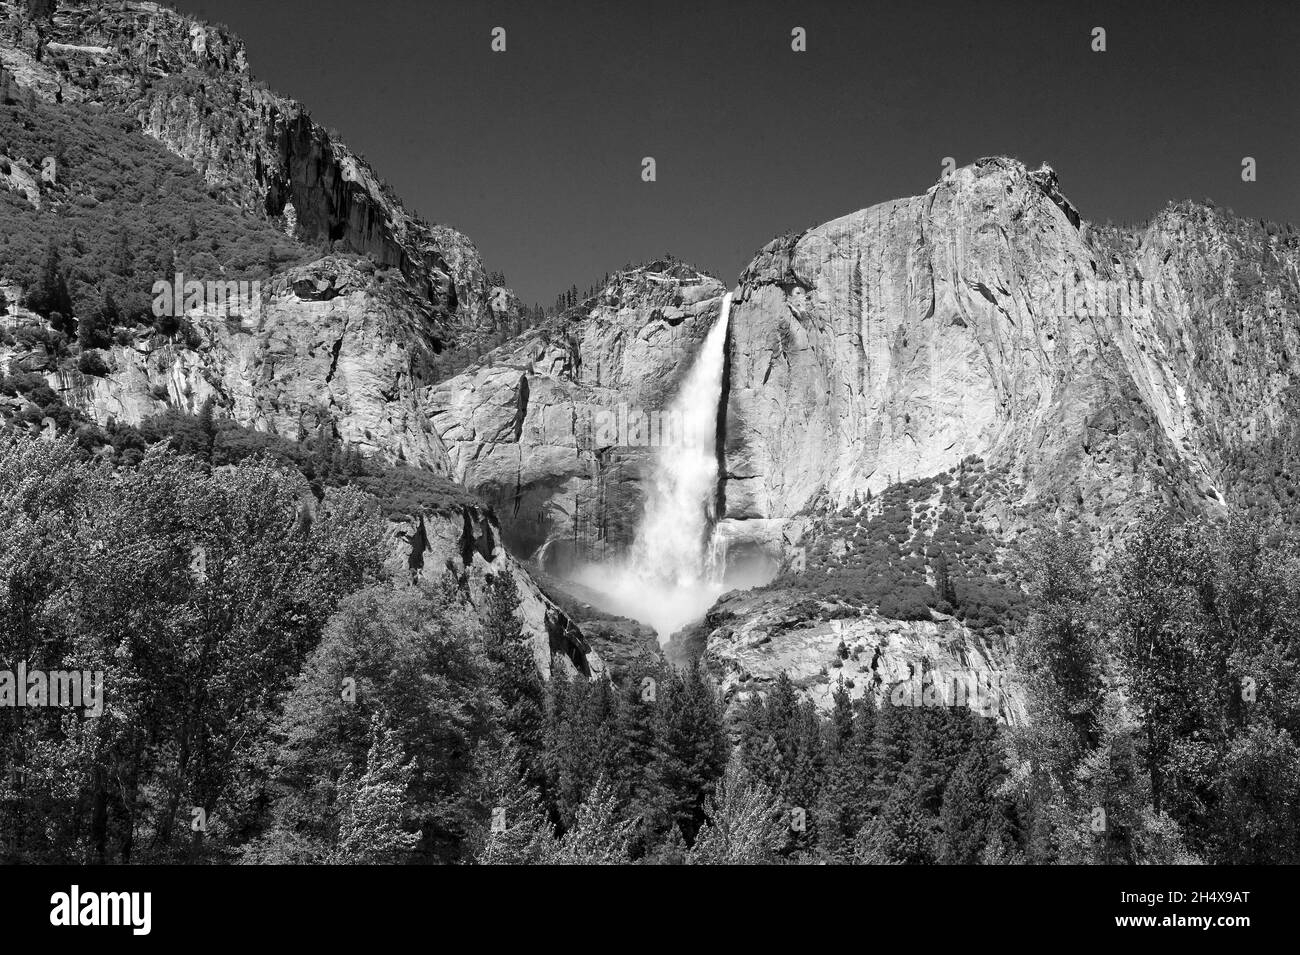 Yosemite National Park in Sierra Nevada mountains of California, USA Stock Photo